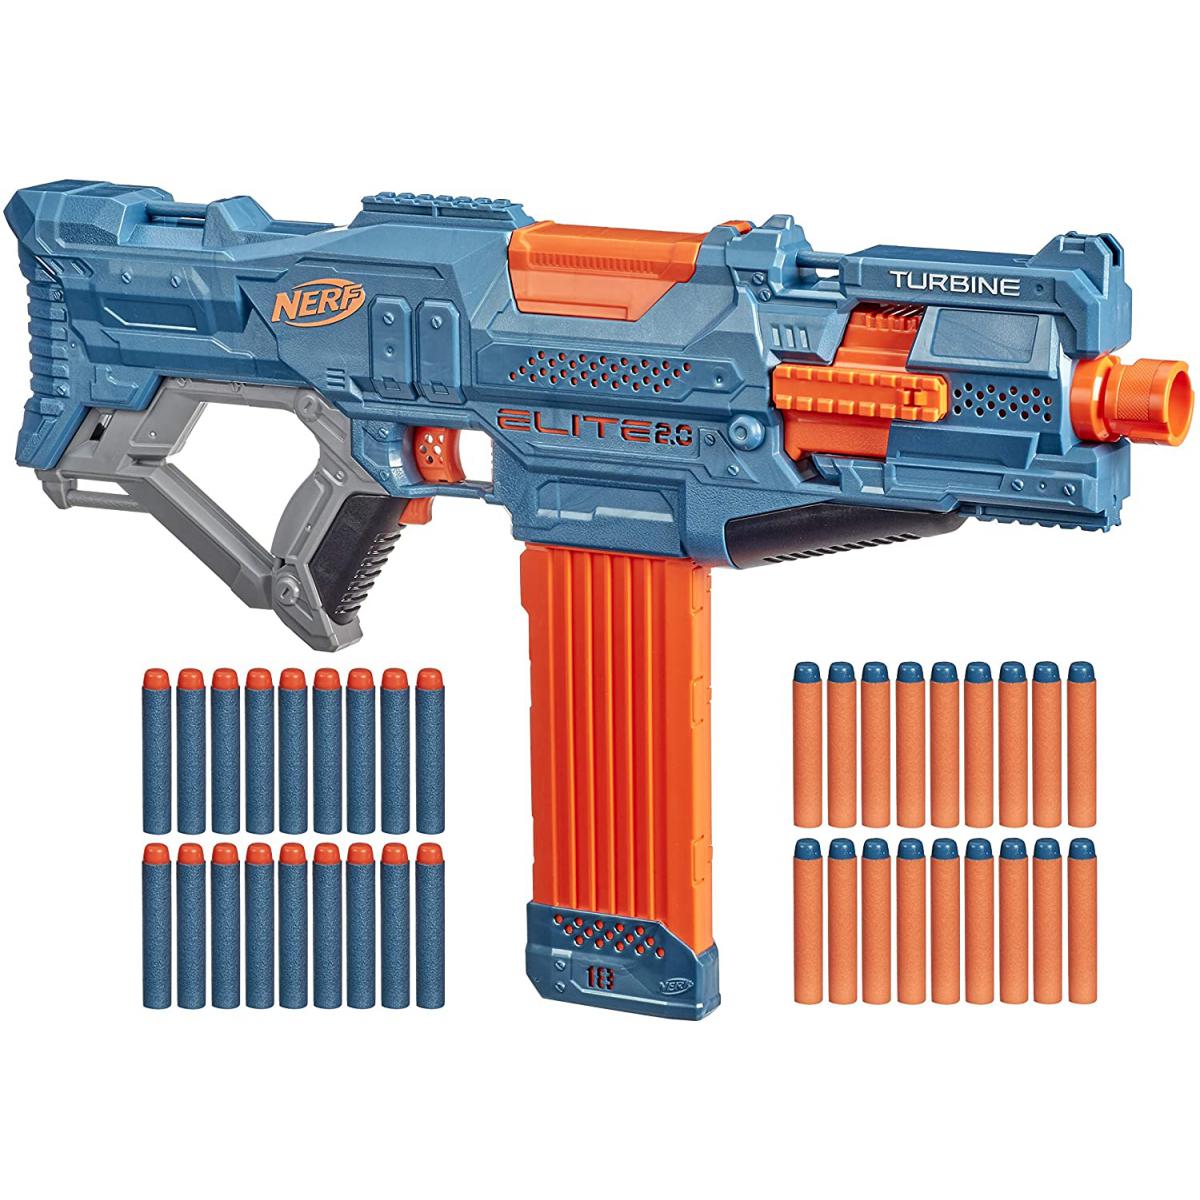 pistolet Elite 2.0 Turbine CS-18 et Flechettes bleu orange